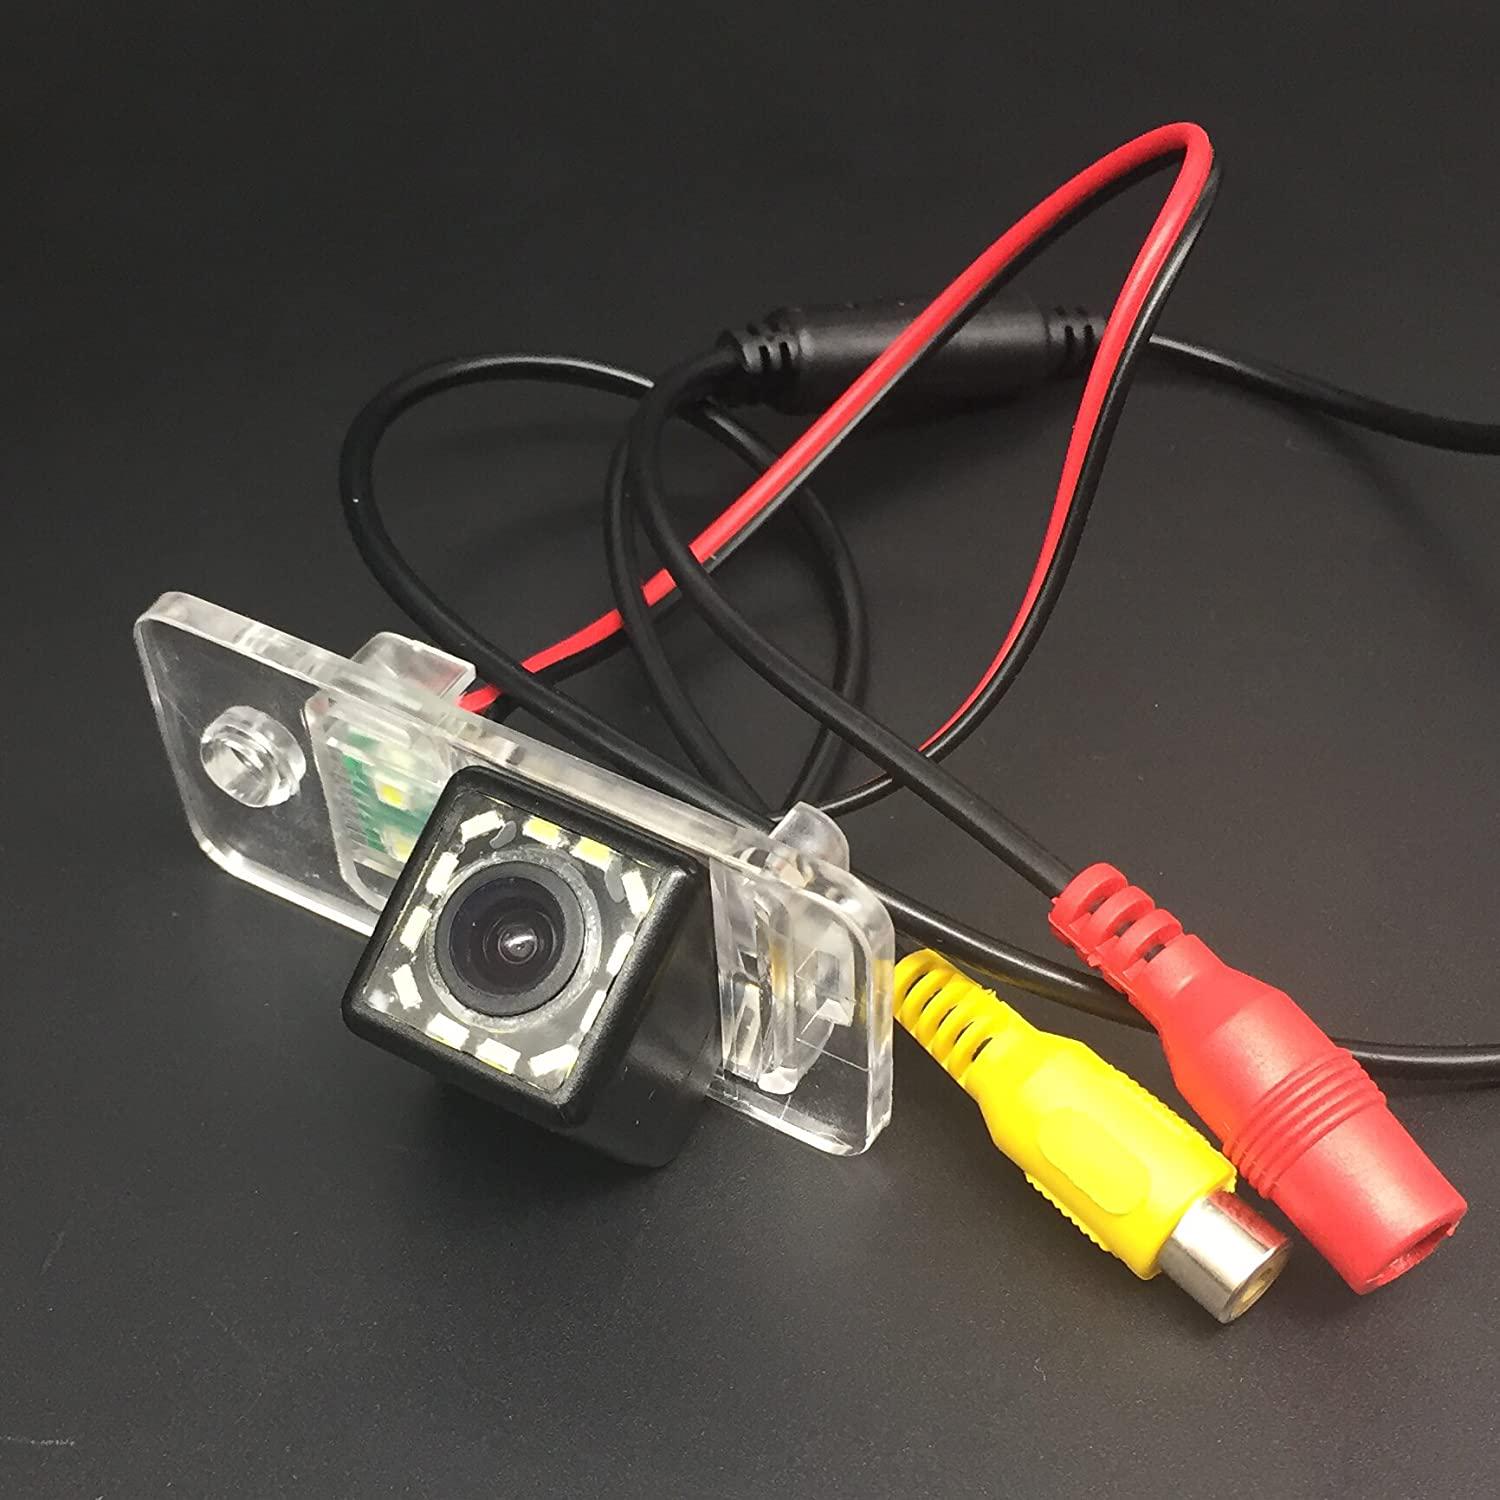 aSATAH, LEDs Car Rear View Camera for Audi A3 A4 S4 RS4 A6 C6 S6 RS6 A8 S8 Q7/Q7 DTI and HD CCD Night Vision Waterproof and Shockproof Reversing Backup Camera (12 LED)